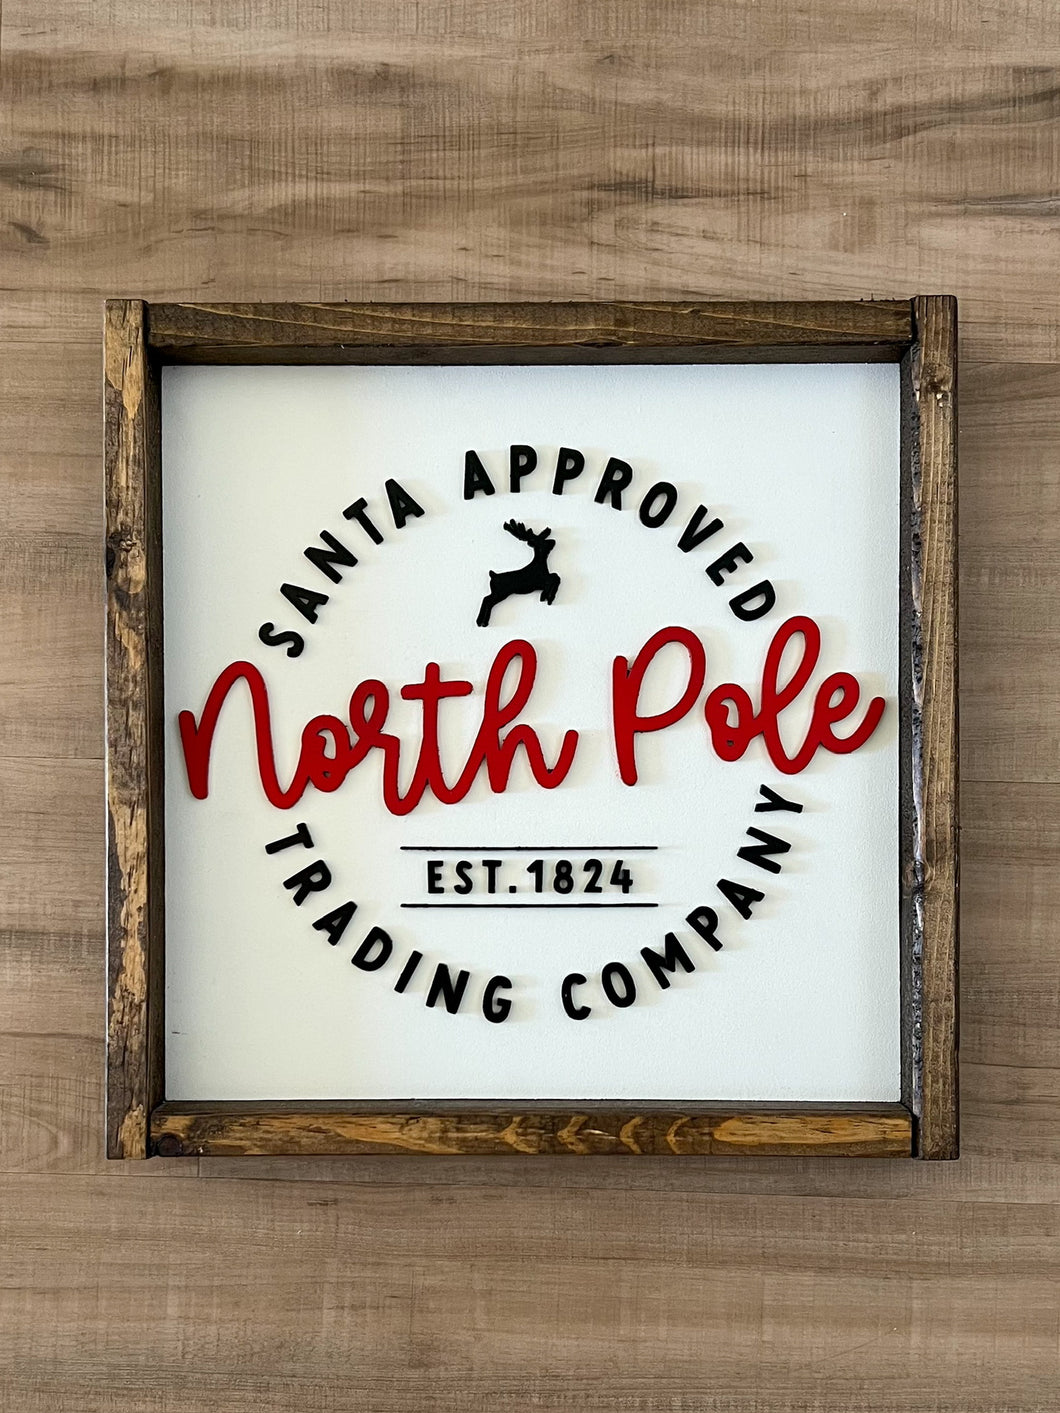 North Pole trading co